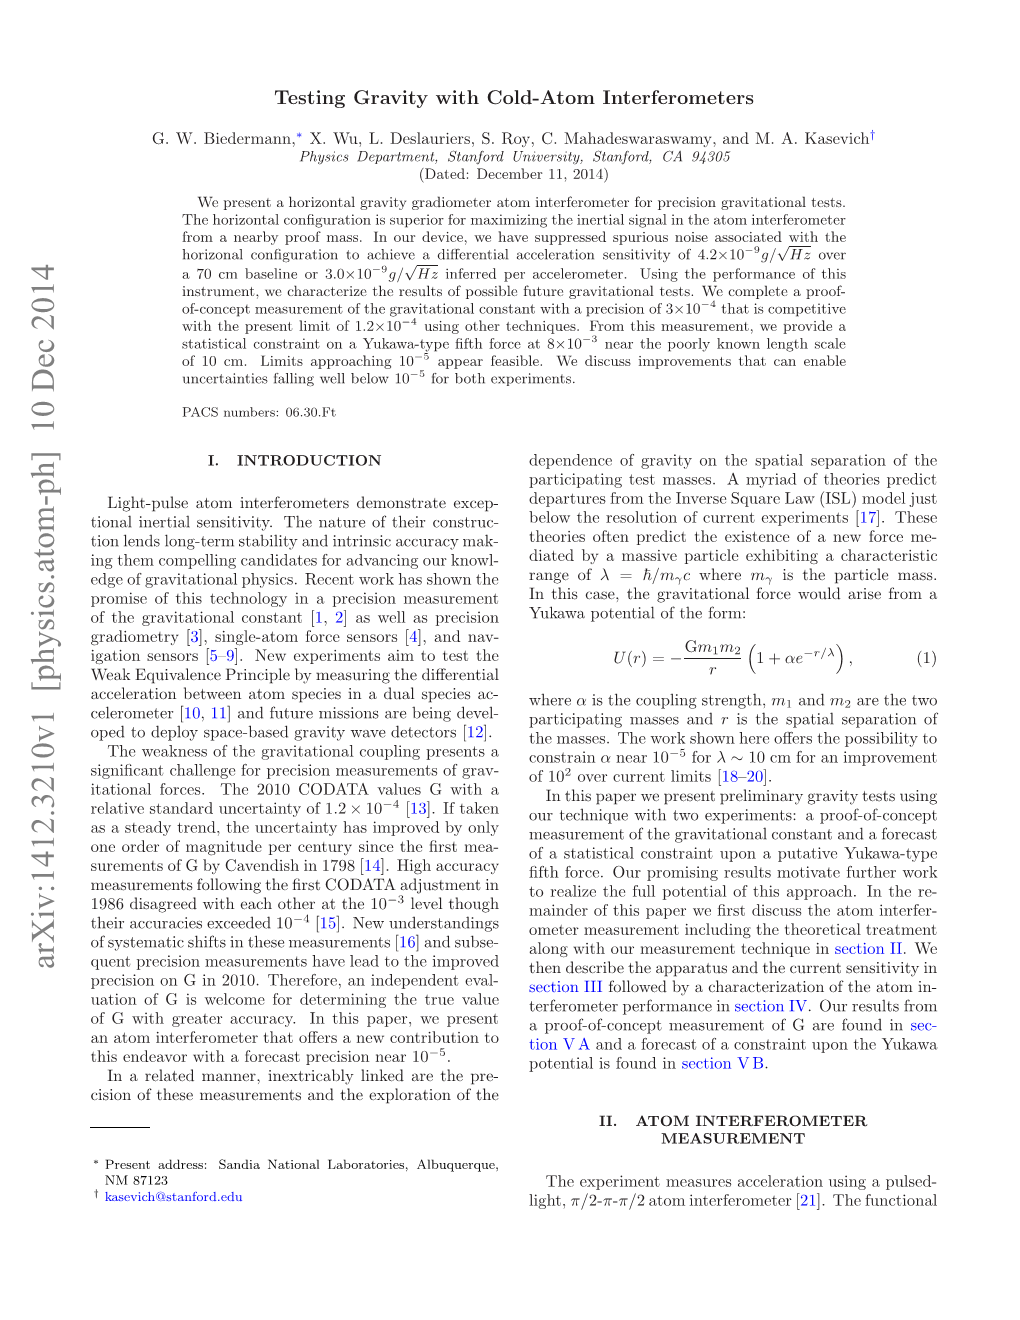 Arxiv:1412.3210V1 [Physics.Atom-Ph] 10 Dec 2014 Ttoa Ocs H 00CDT Ausgwt a with G Values CODATA 1 of 2010 Uncertainty Standard the Relative Grav- Forces